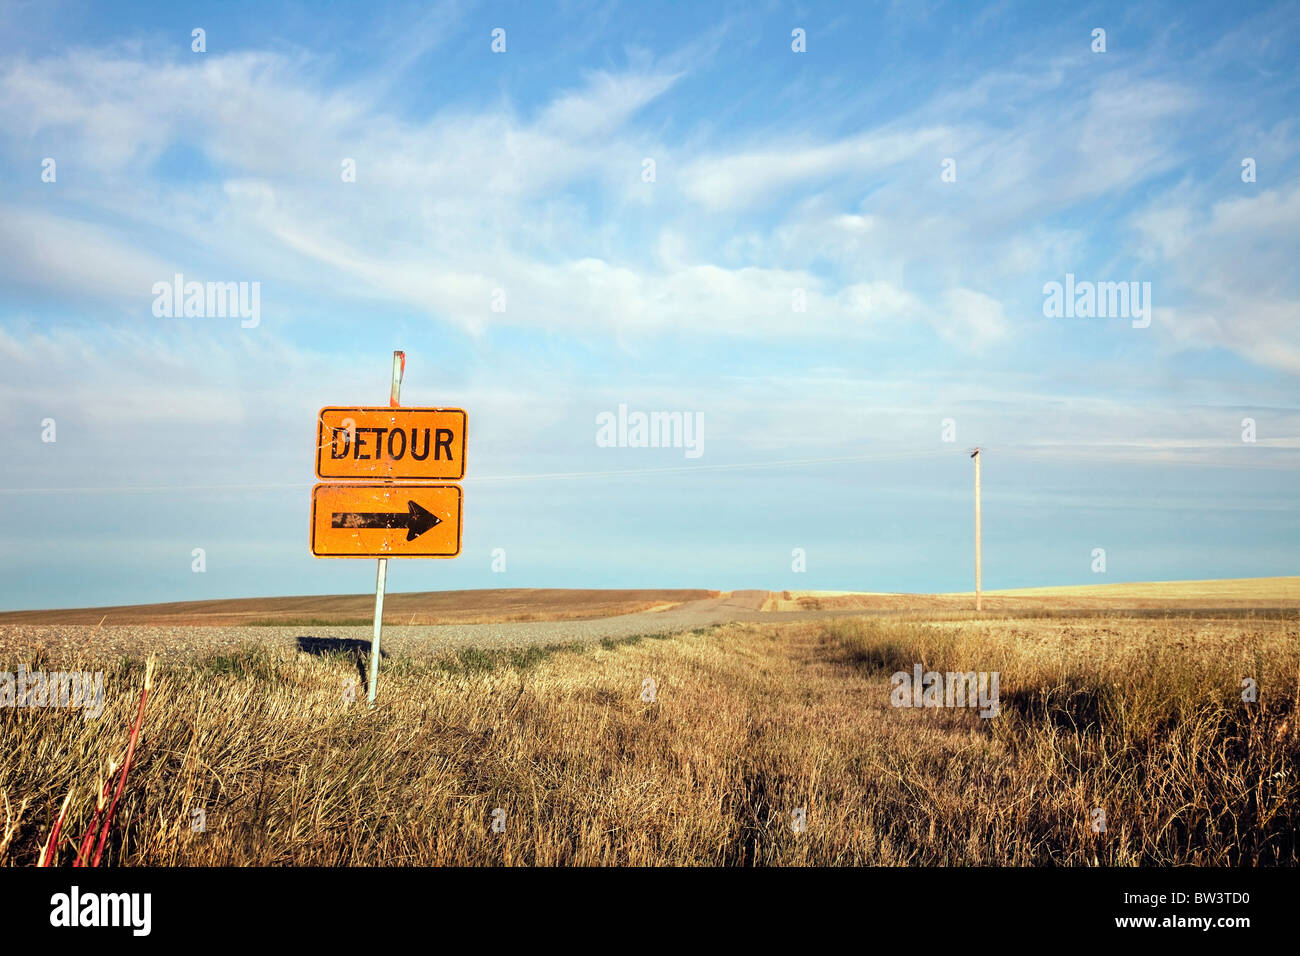 Detour sign by rural road, Saskatchewan, Canada Stock Photo